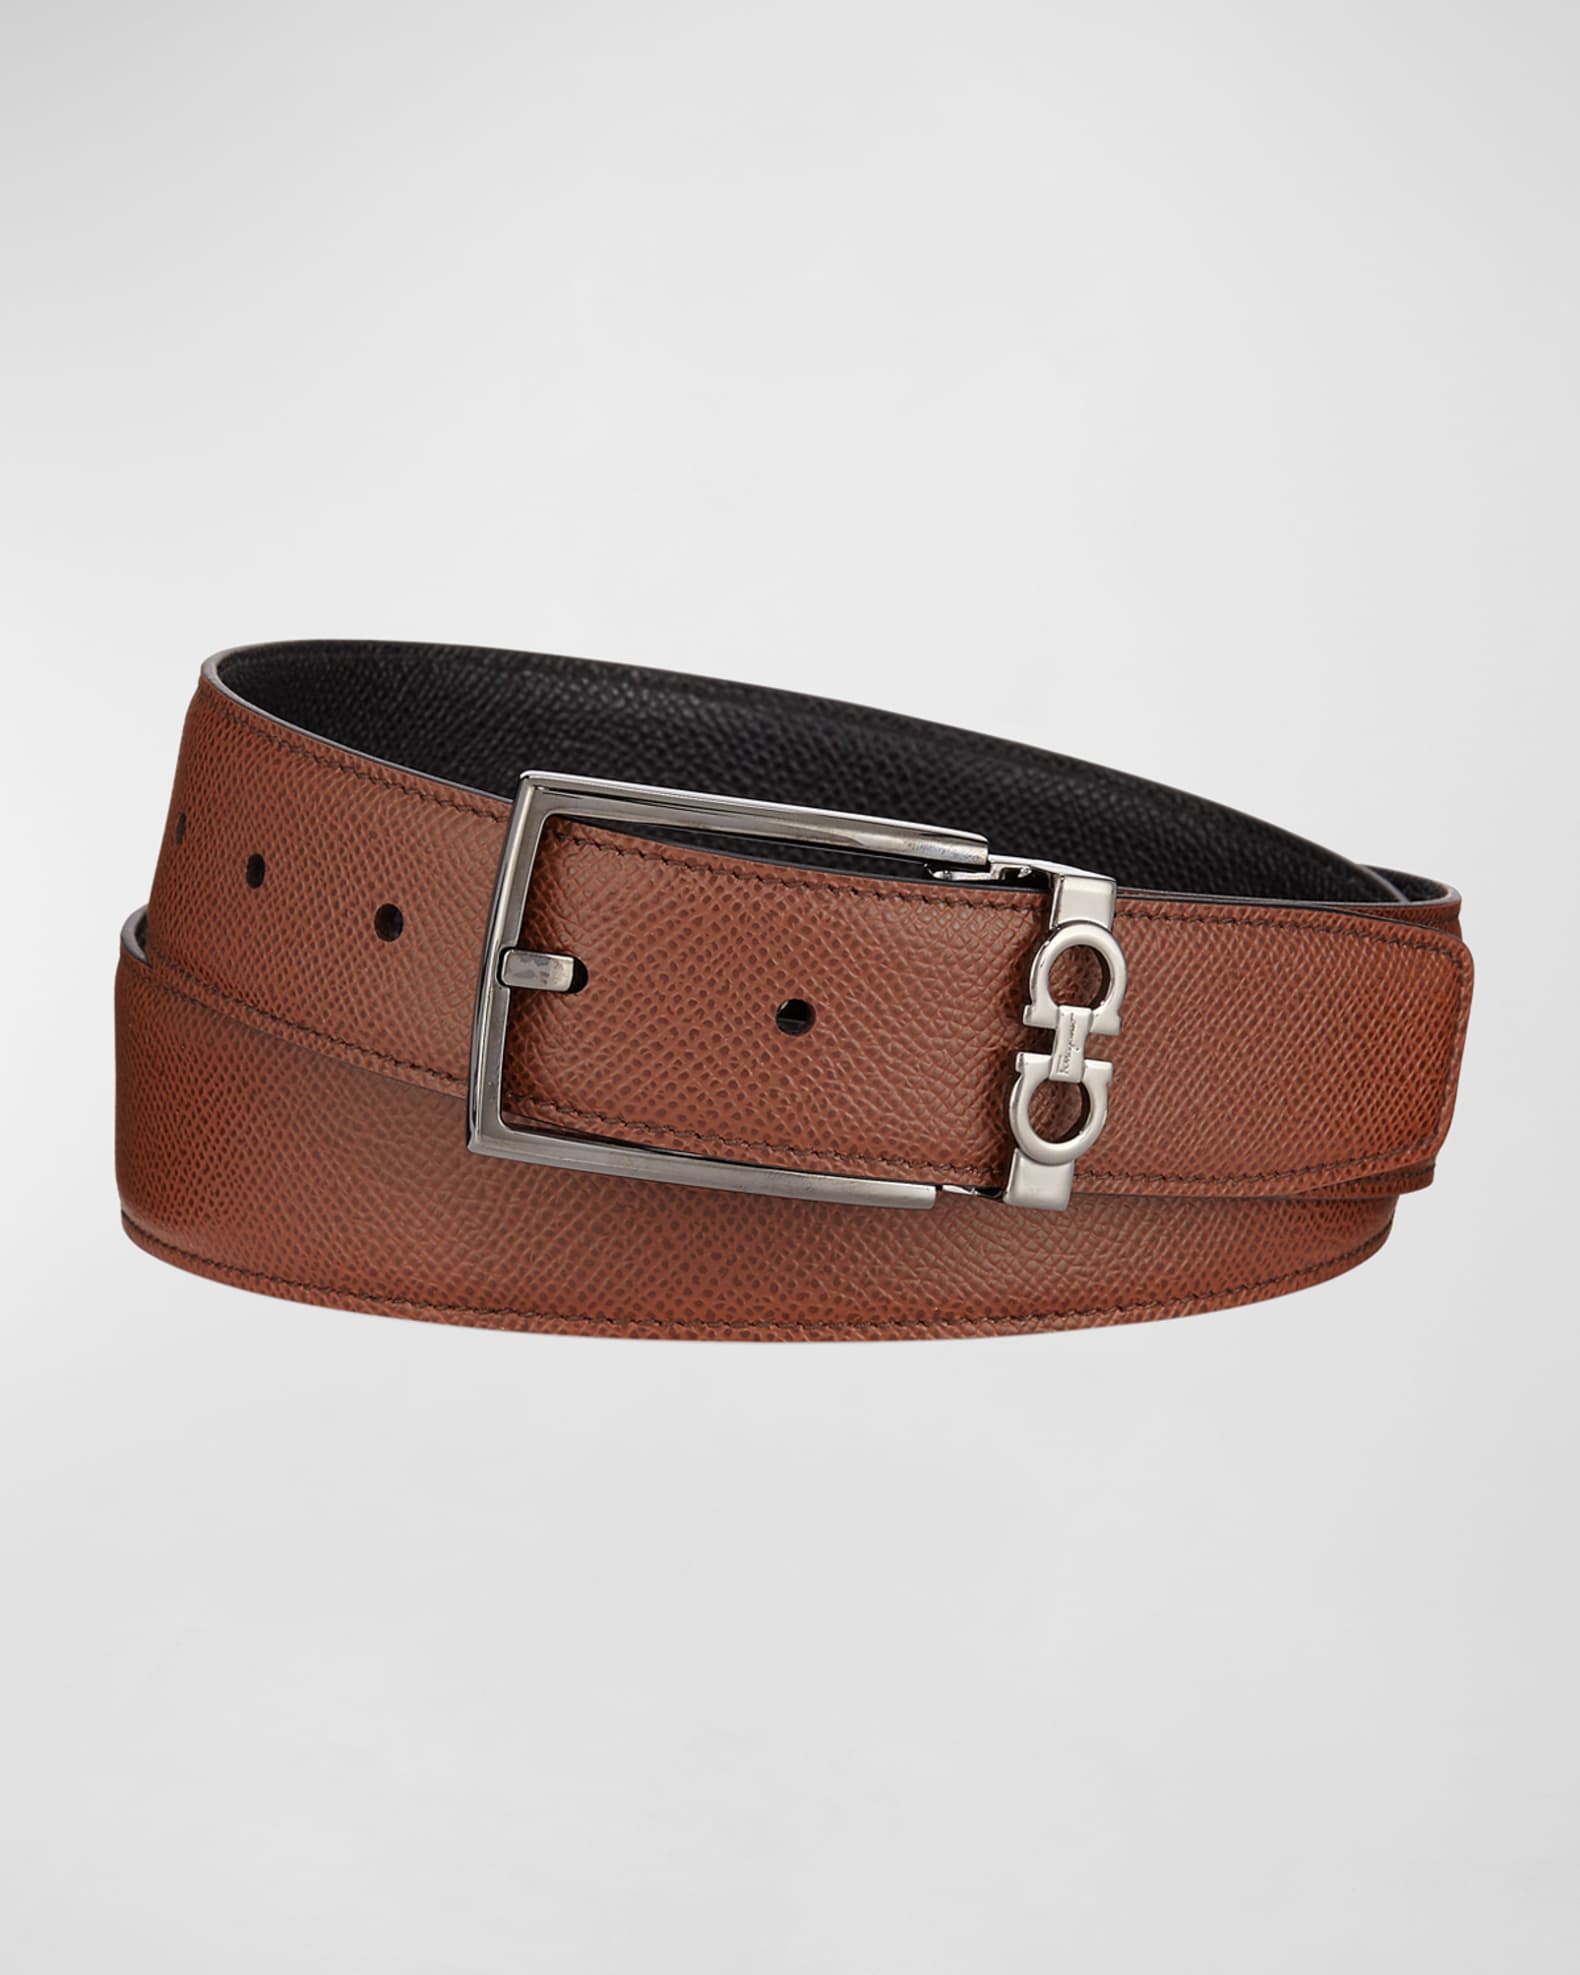 Ferragamo Men's Reversible Leather Belt with Beveled Gancini Buckle